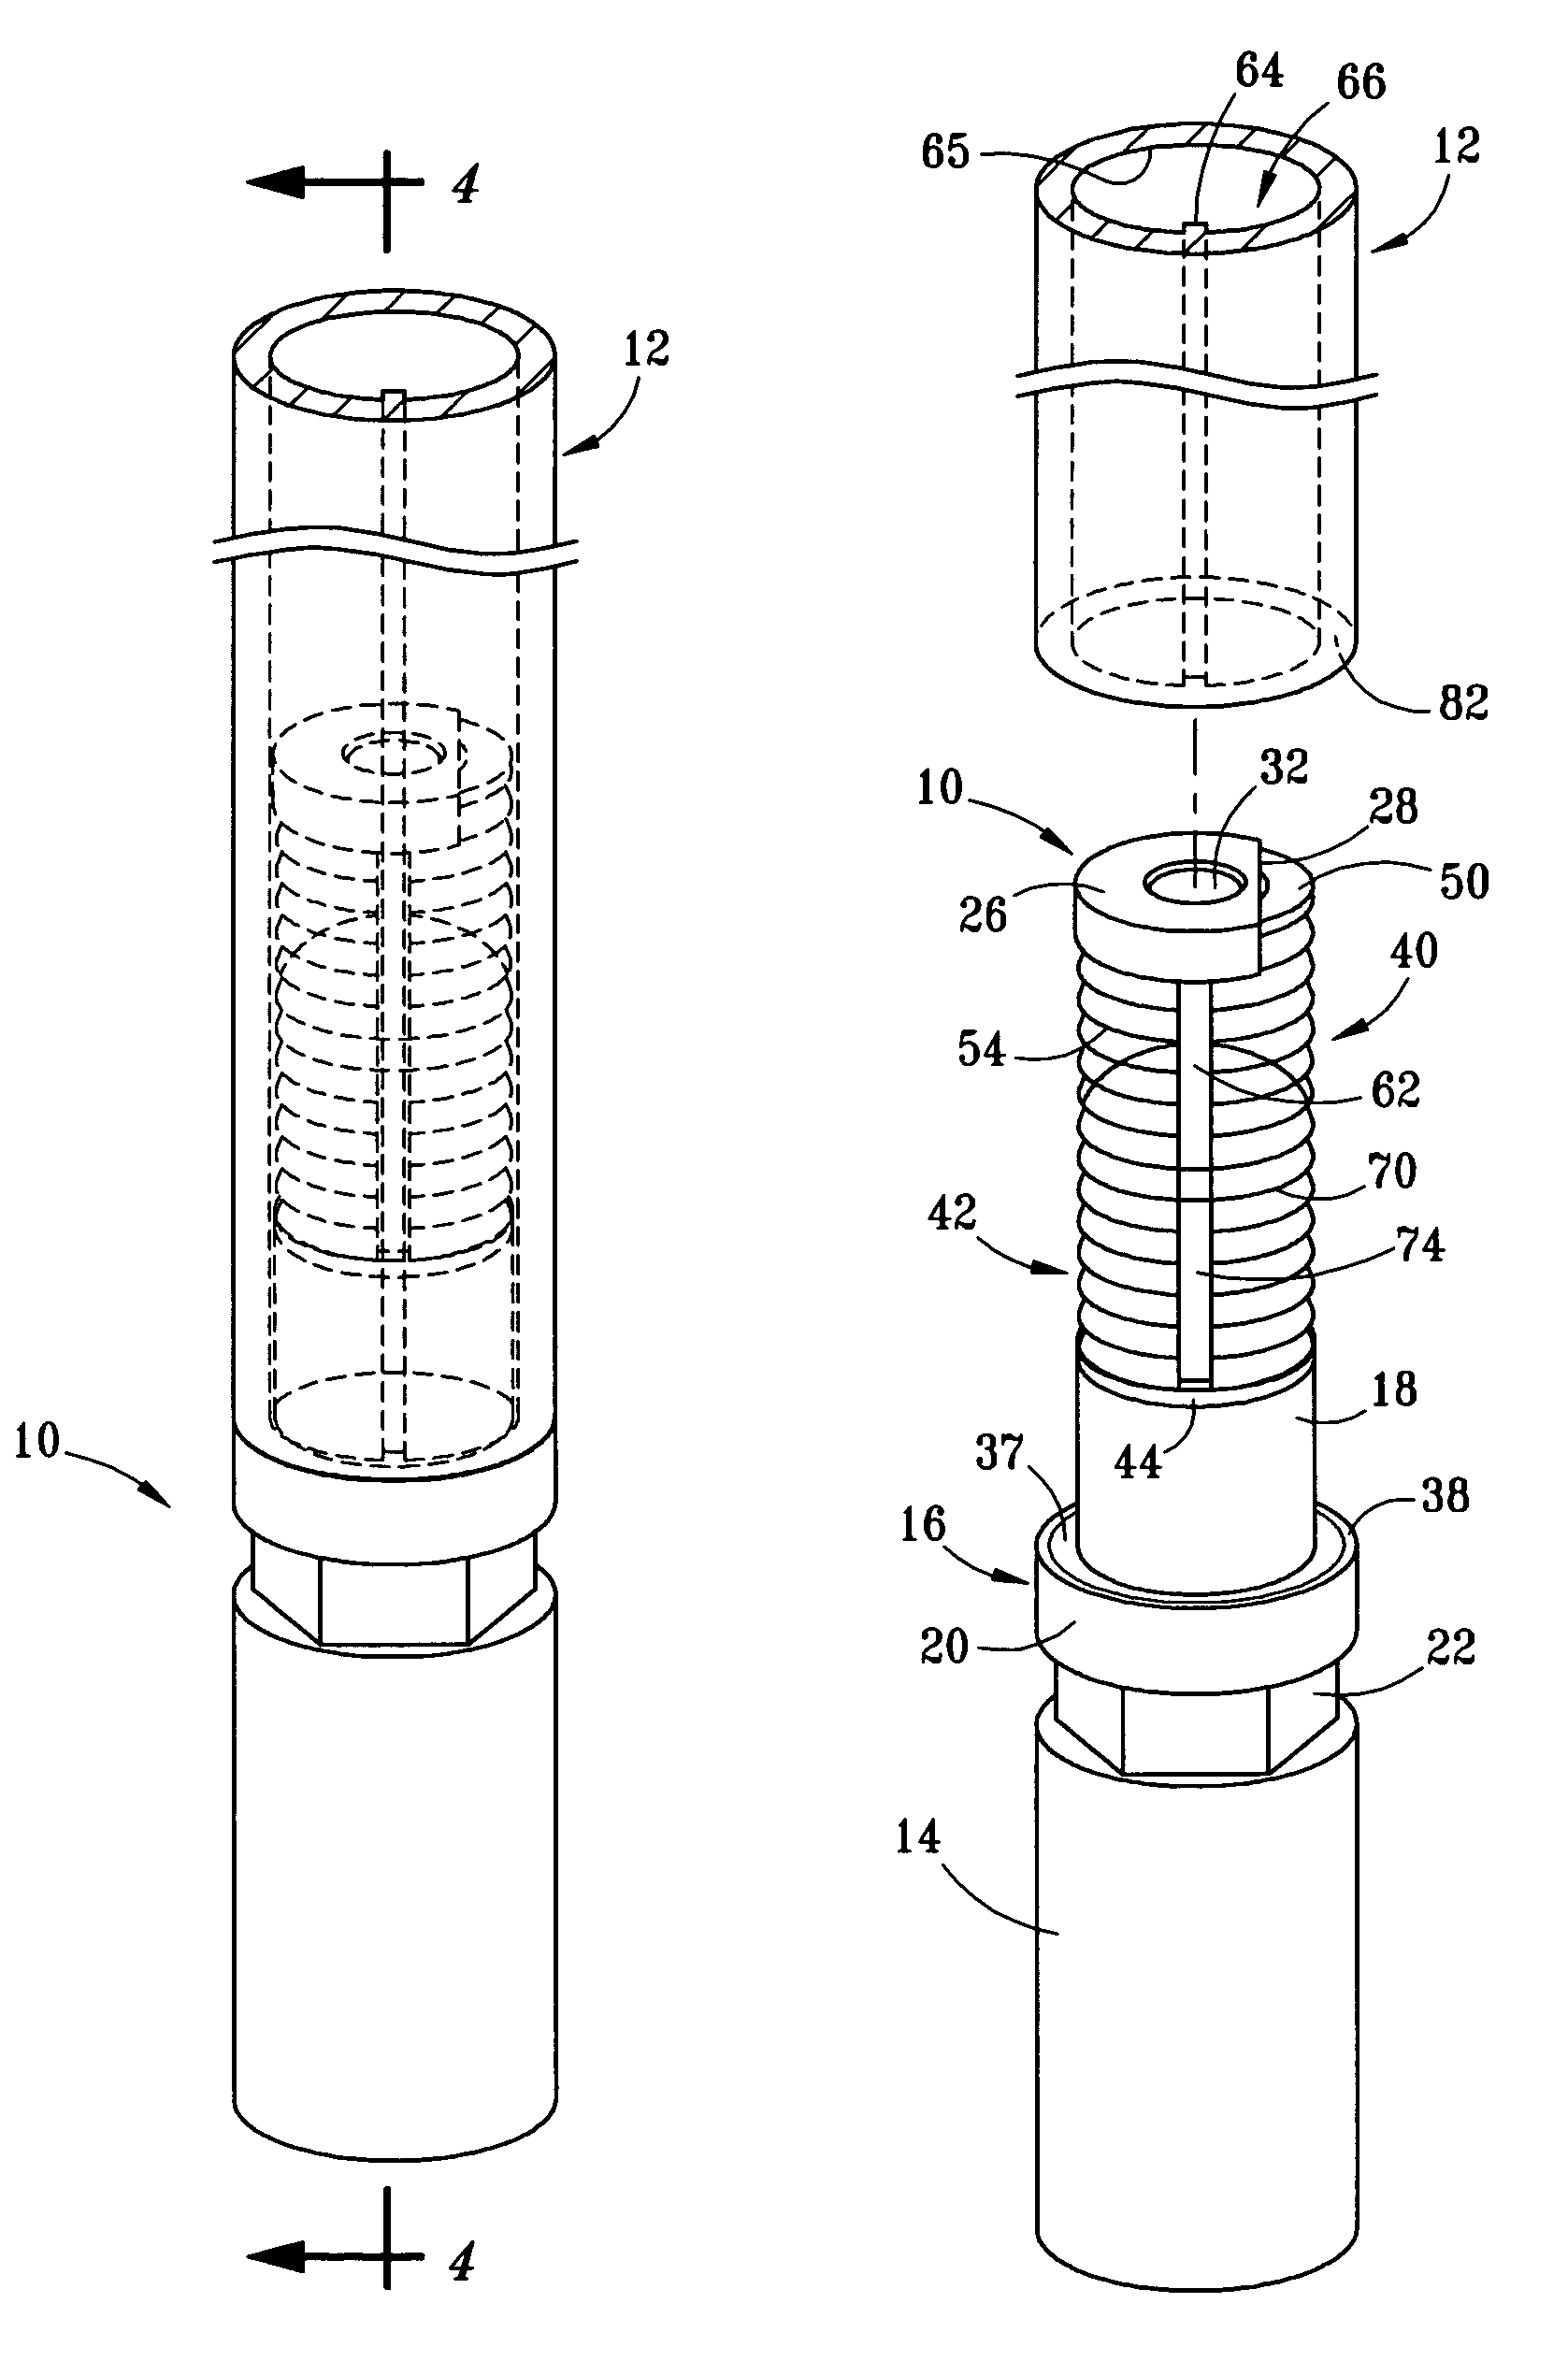 Internal slip connector